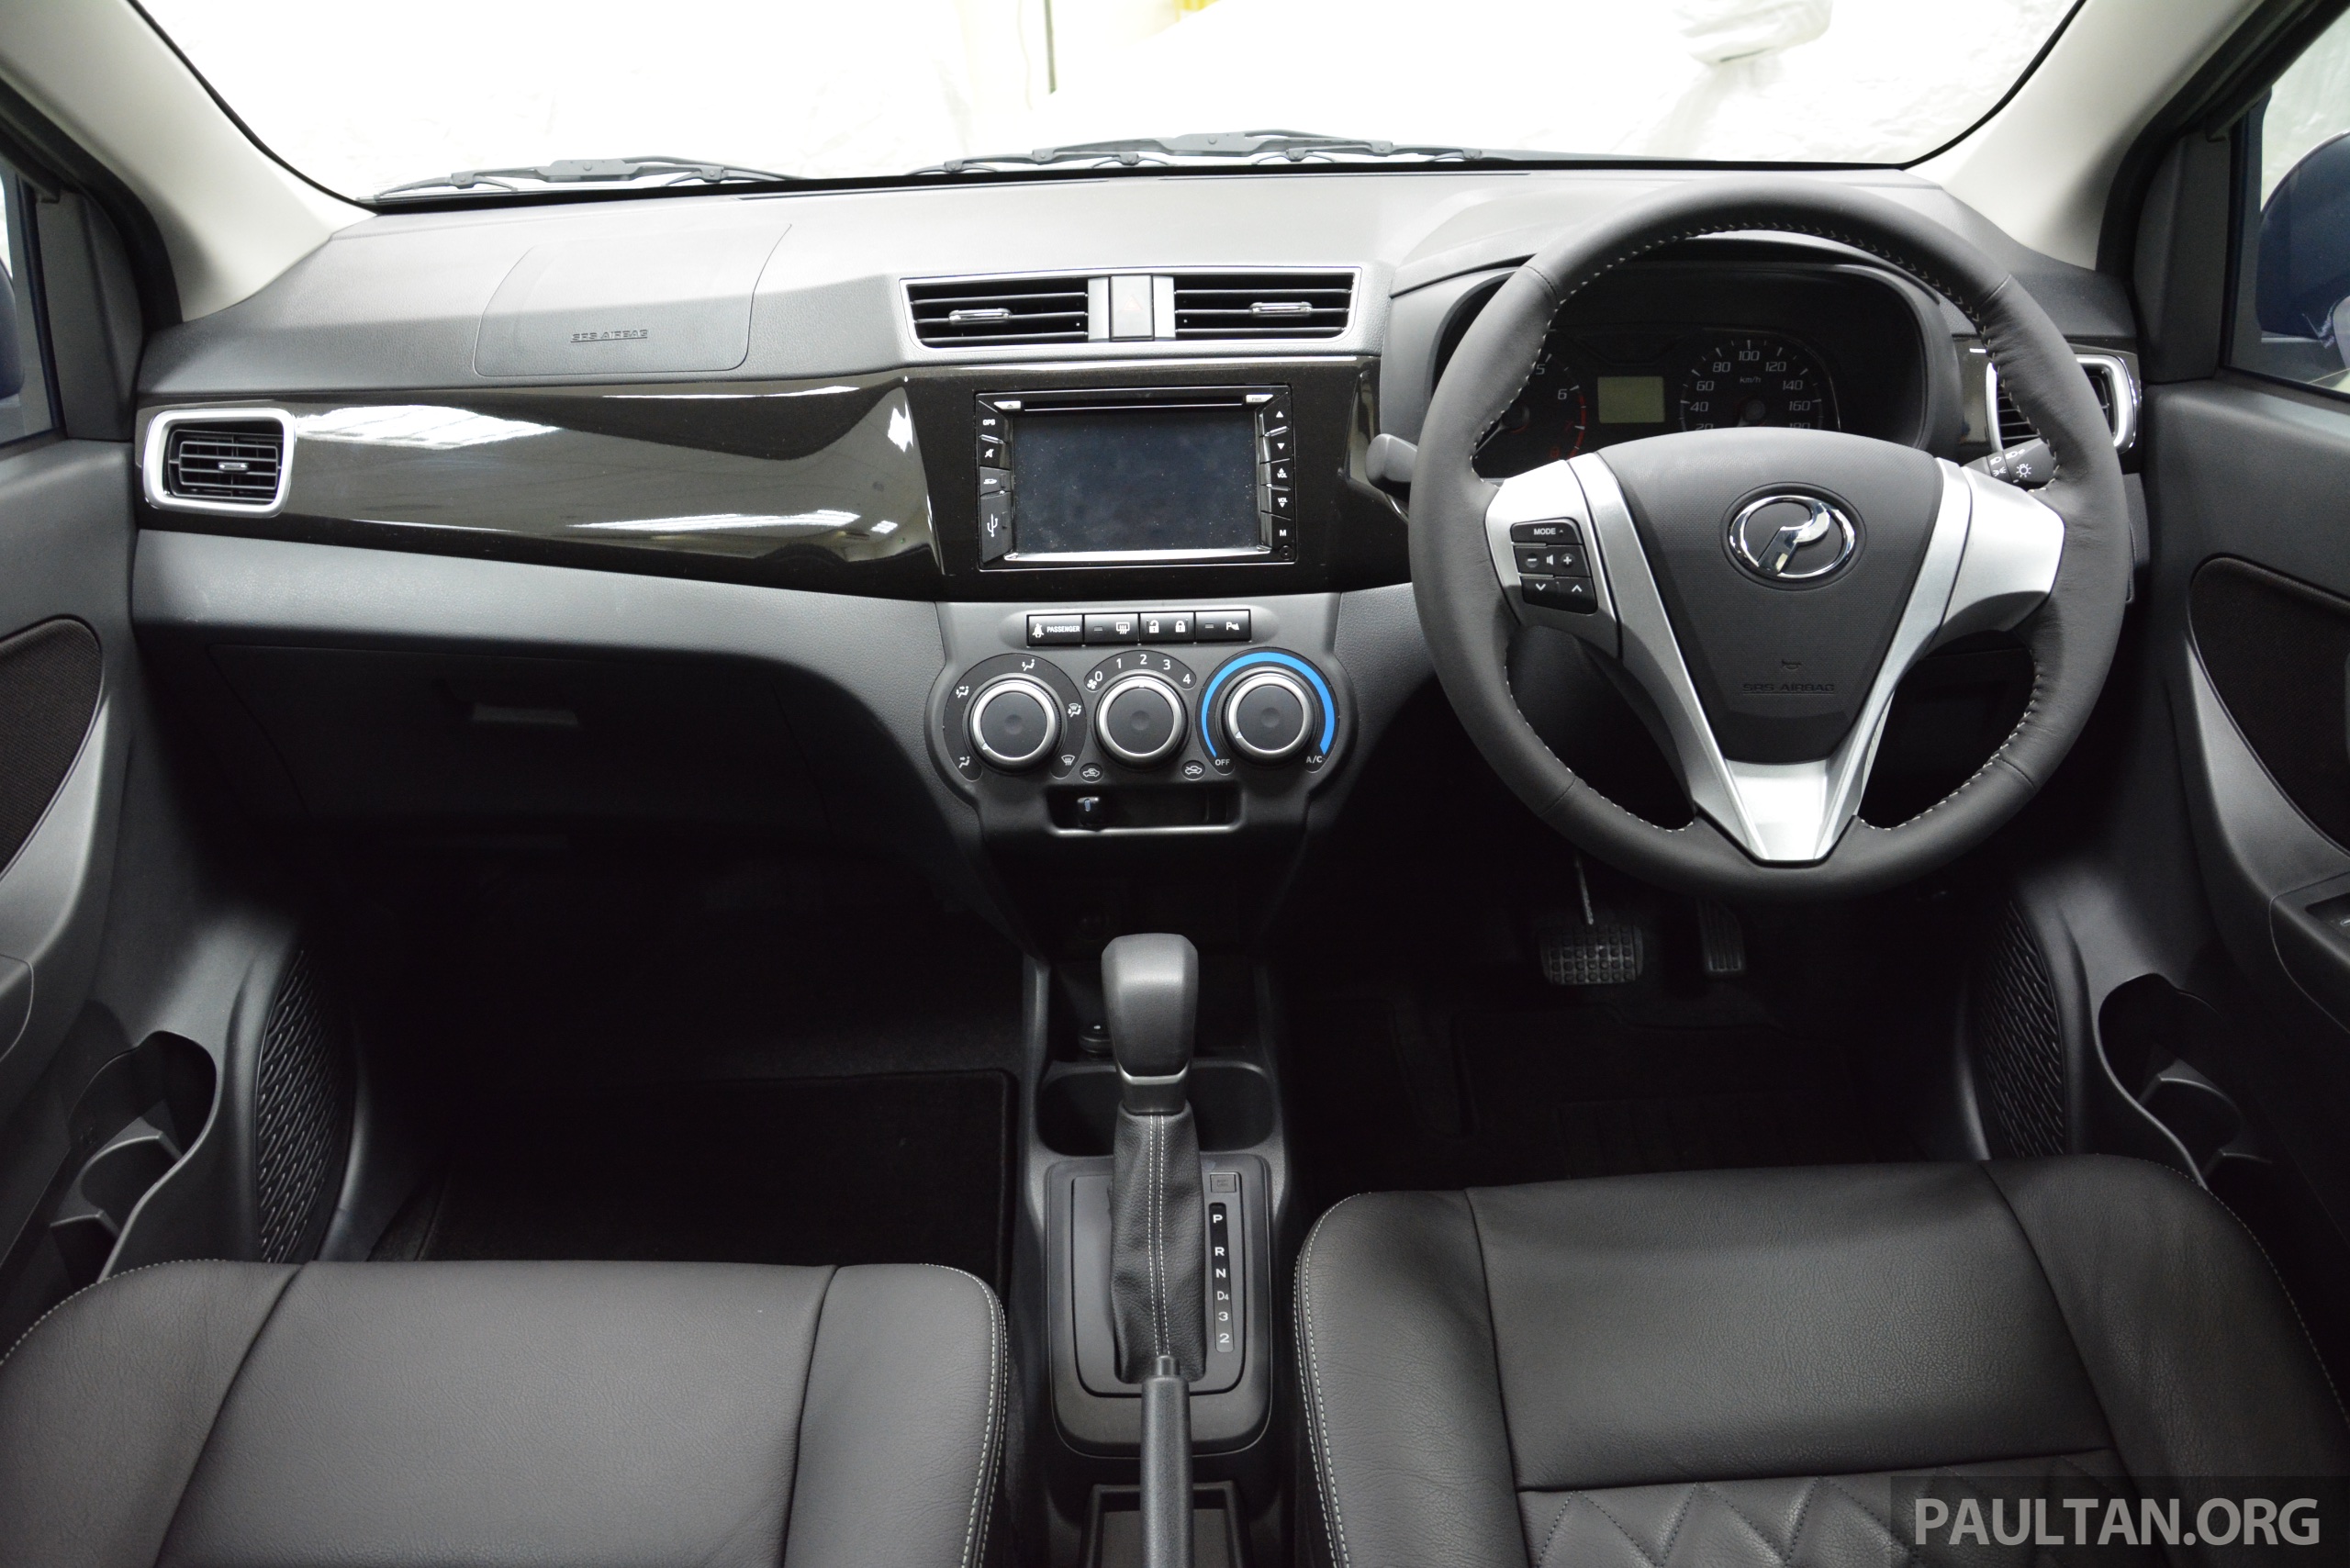 Perodua Bezza - initial specifications of the new D63D sedan